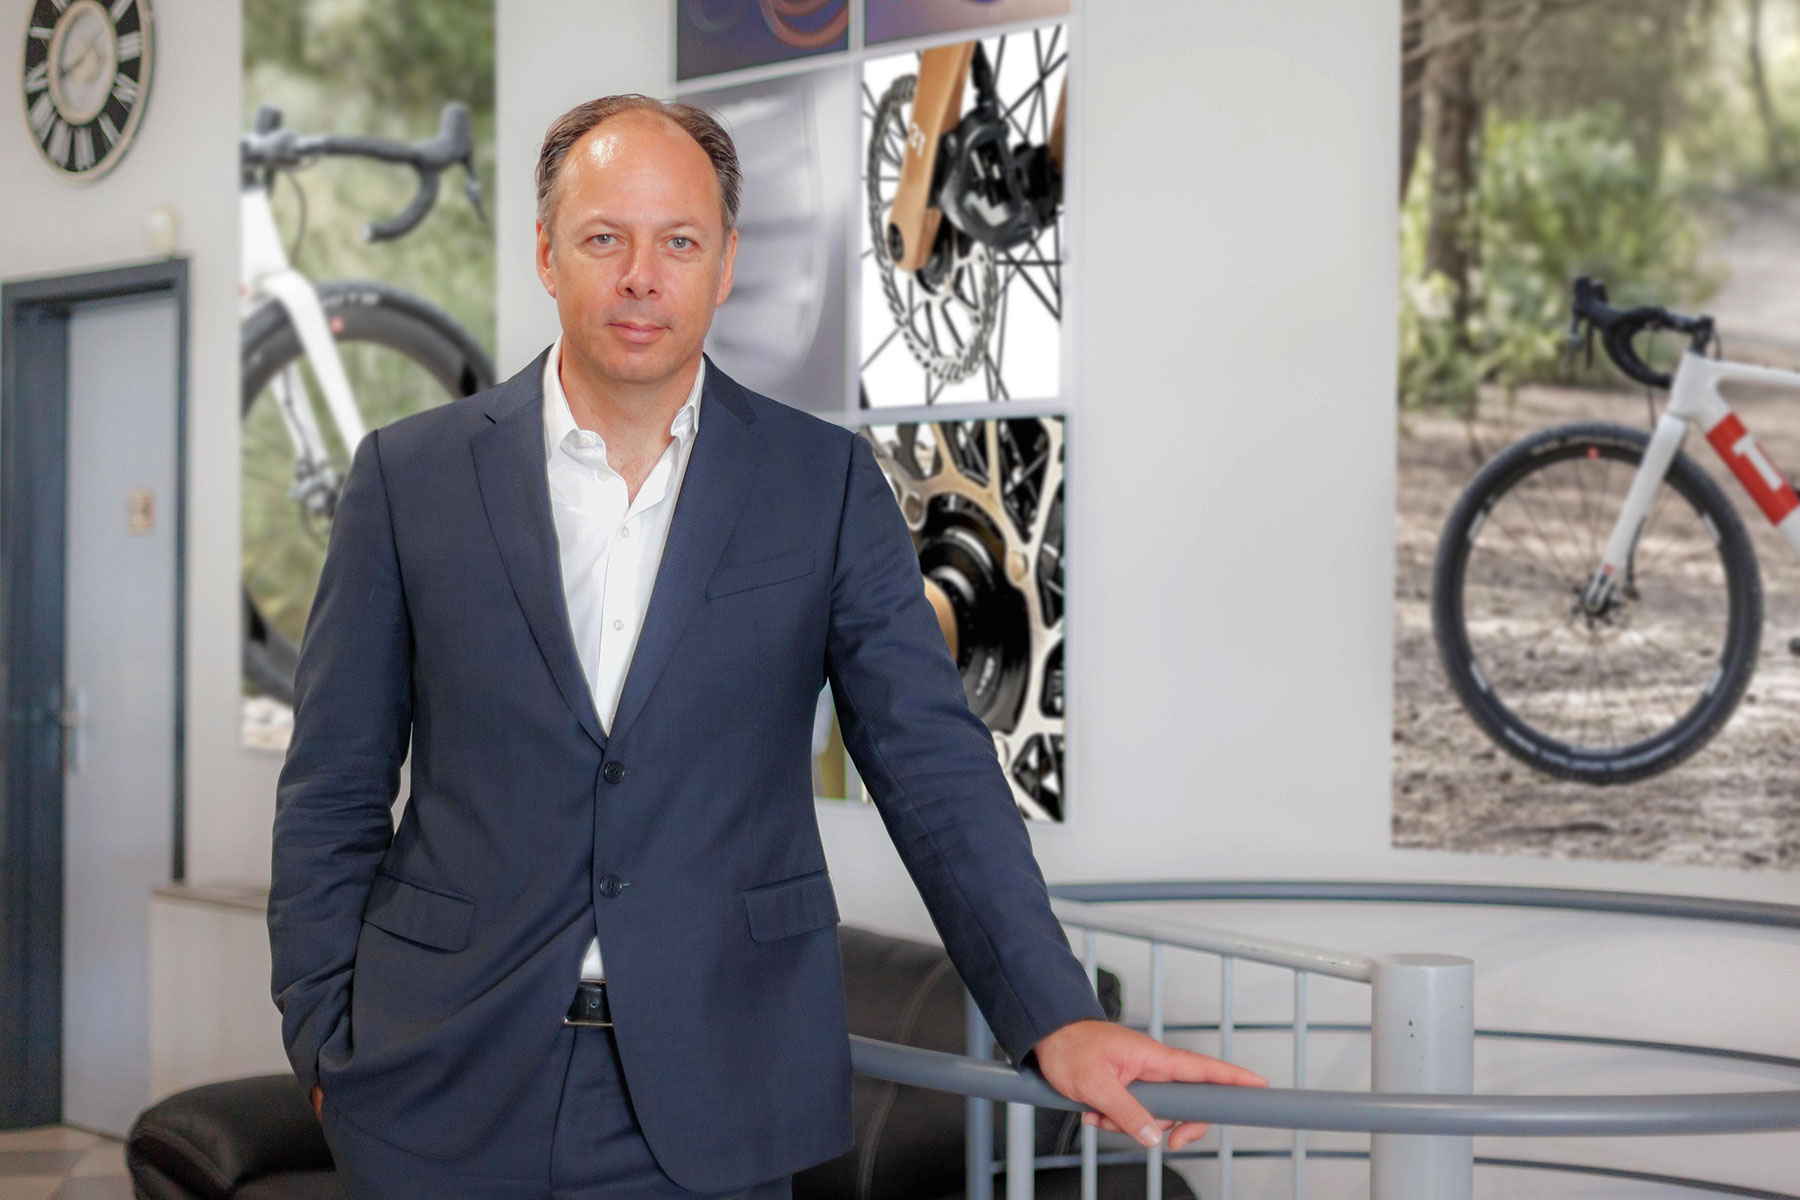 Modern 3T founder & owner Rene Wiertz steps down as CEO